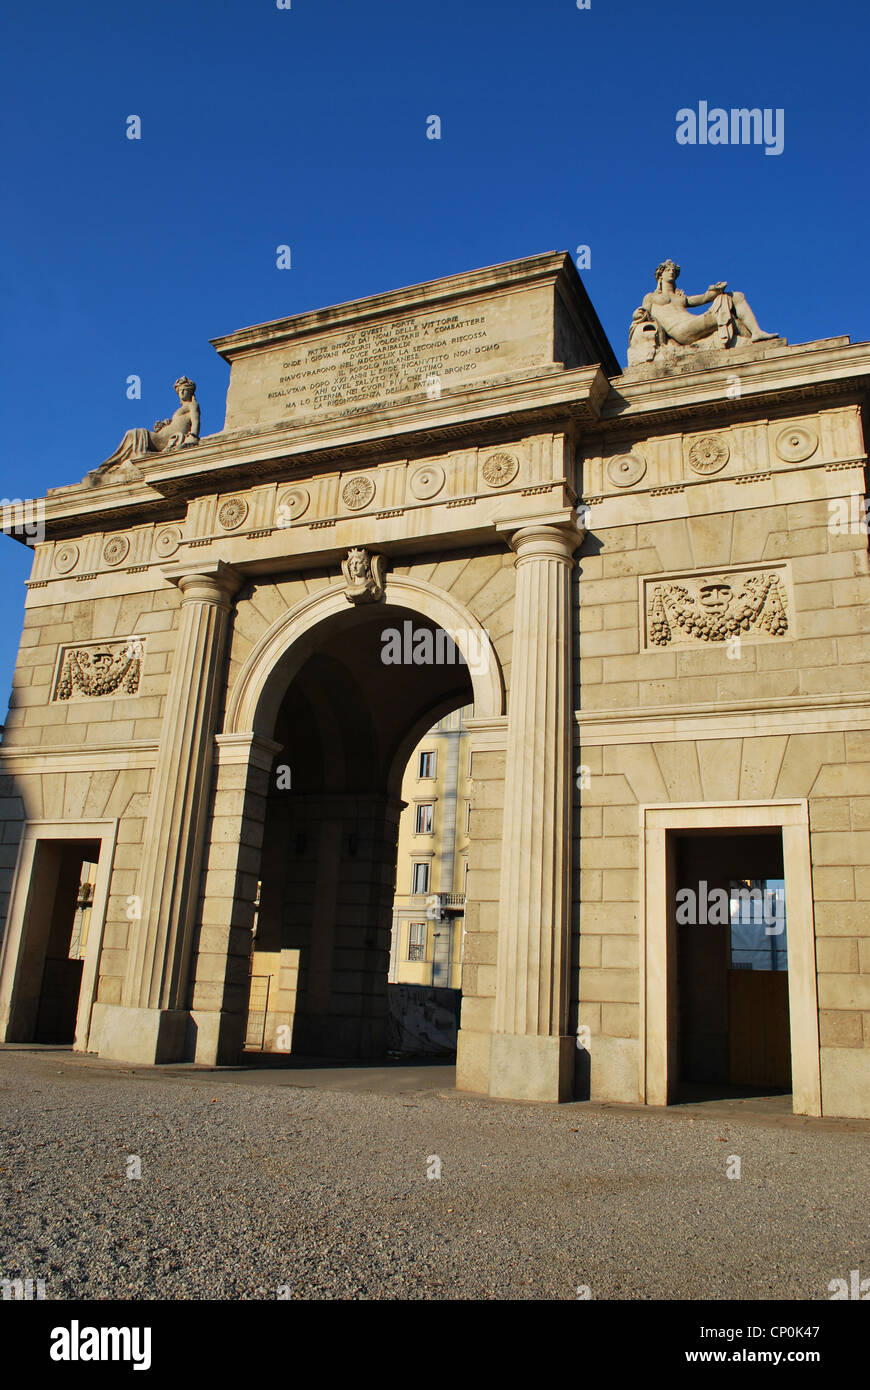 Porta garibaldi gate hi-res stock photography and images - Alamy